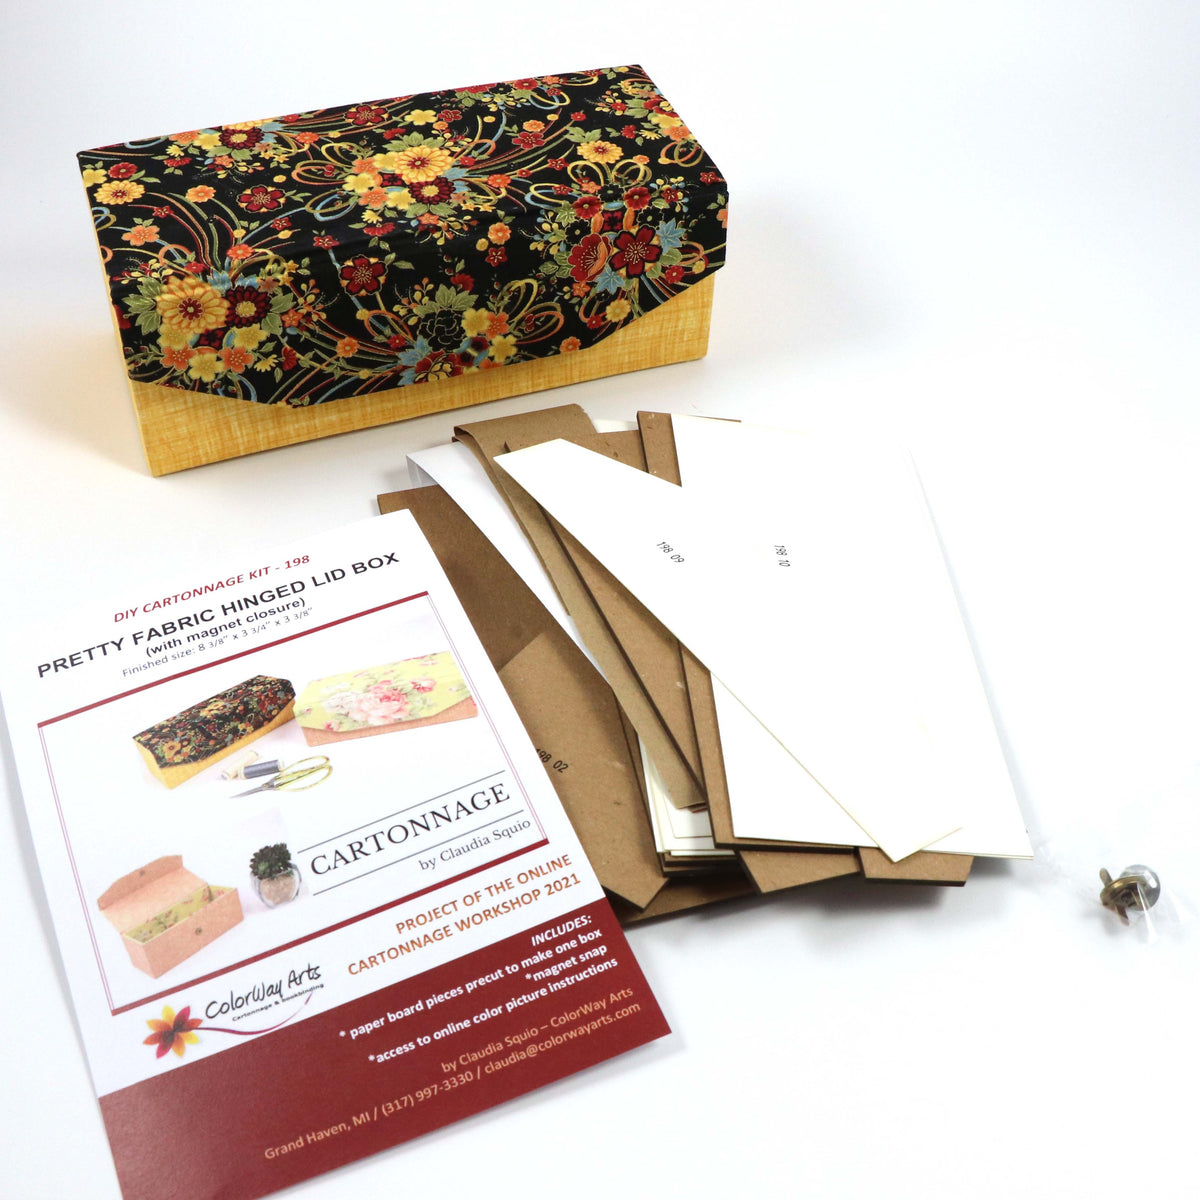 Pretty fabric hinged lid box DIY kit, cartonnage kit 198, workshop box - Colorway Arts